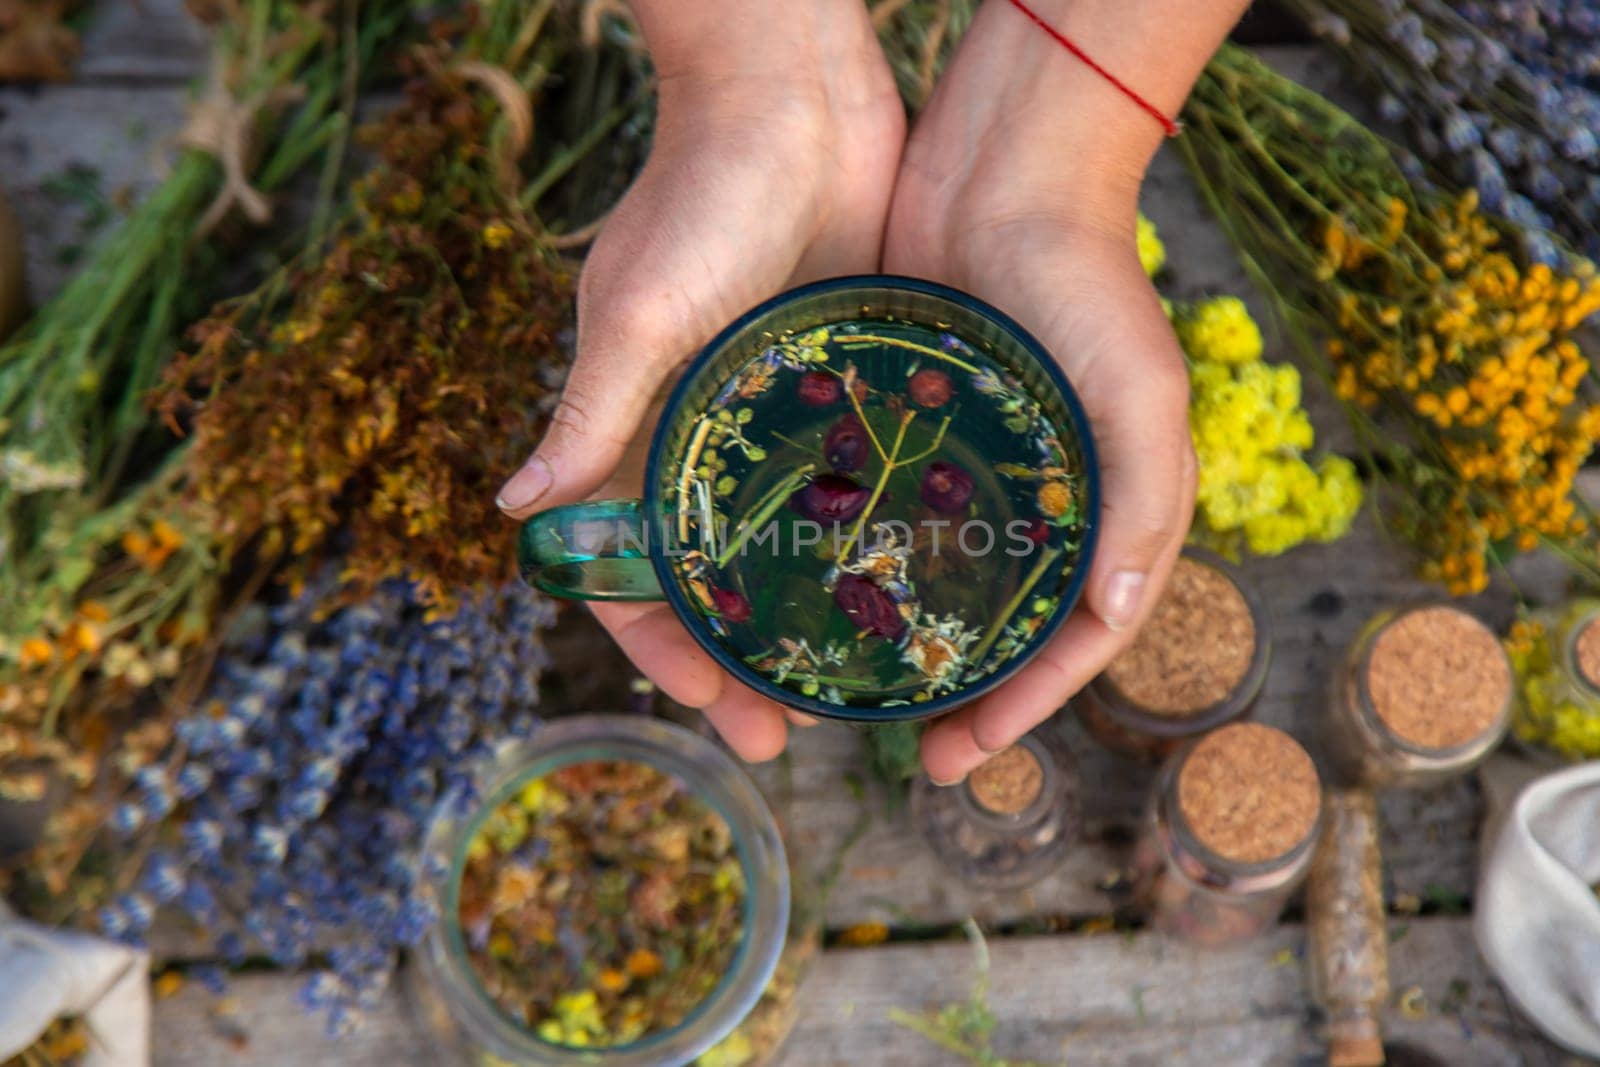 woman brews herbal tea. Selective focus. by yanadjana